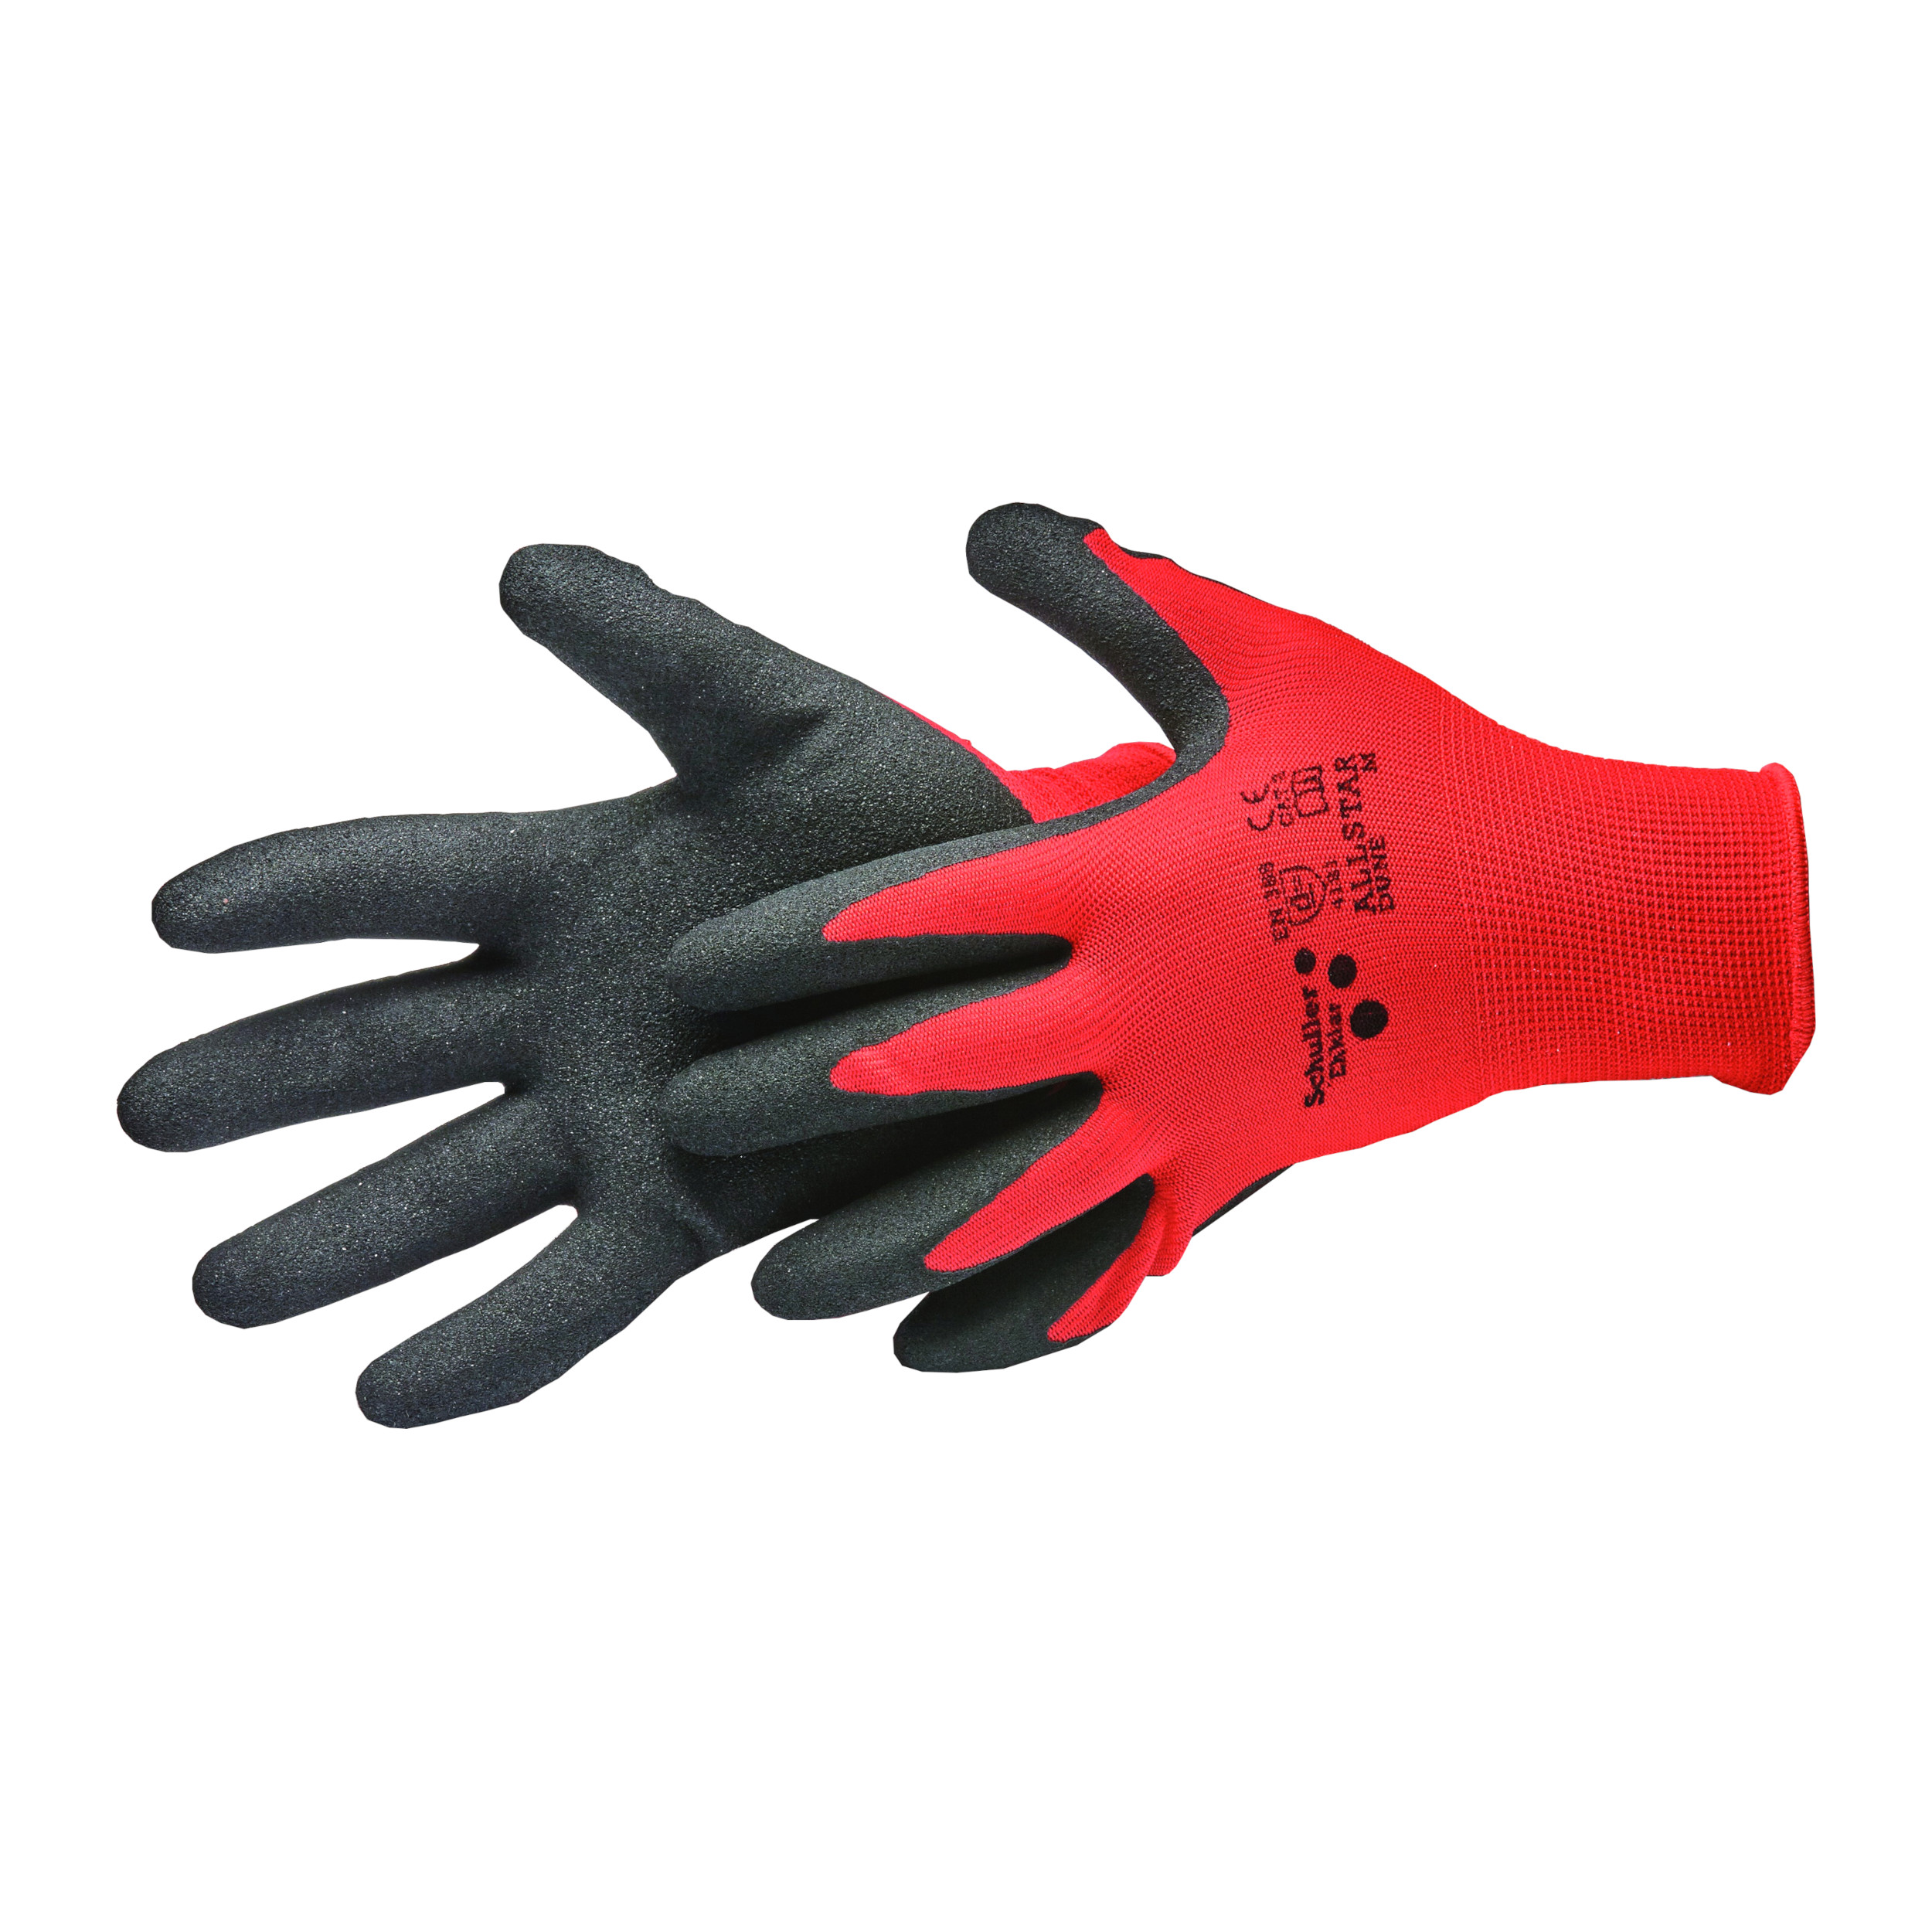 rukavice ALLSTAR, s nitrilovým potahem a úpletem, velikost 10 0.06 Kg TOP Sklad4 600120 122